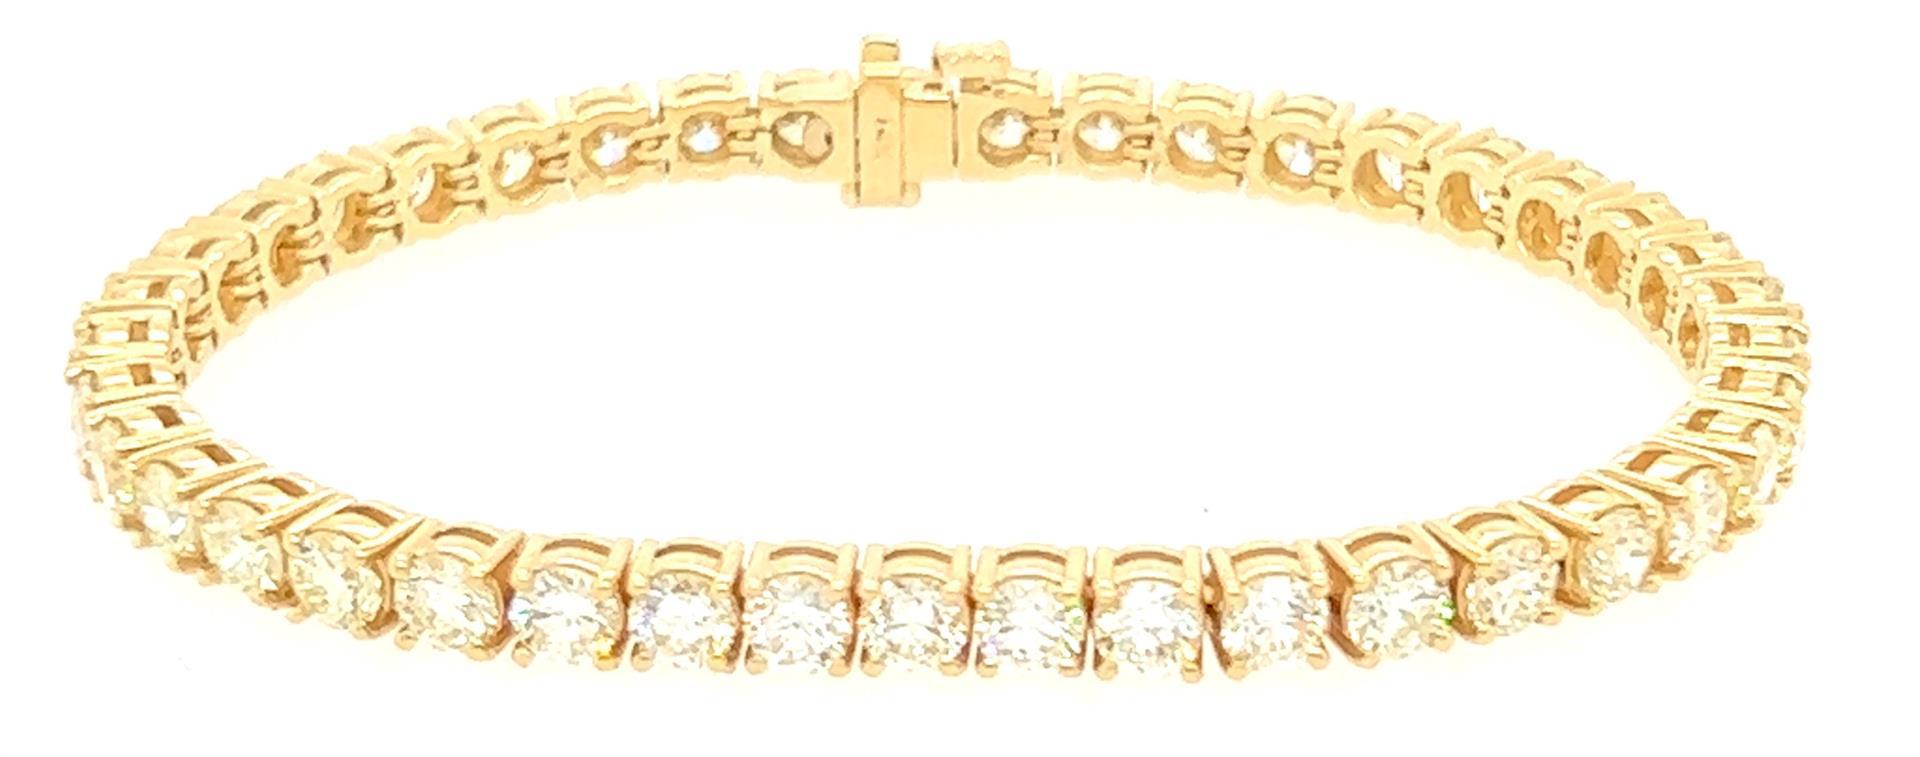 9.55 ctw Diamond Tennis Bracelet - 14KT Yellow Gold